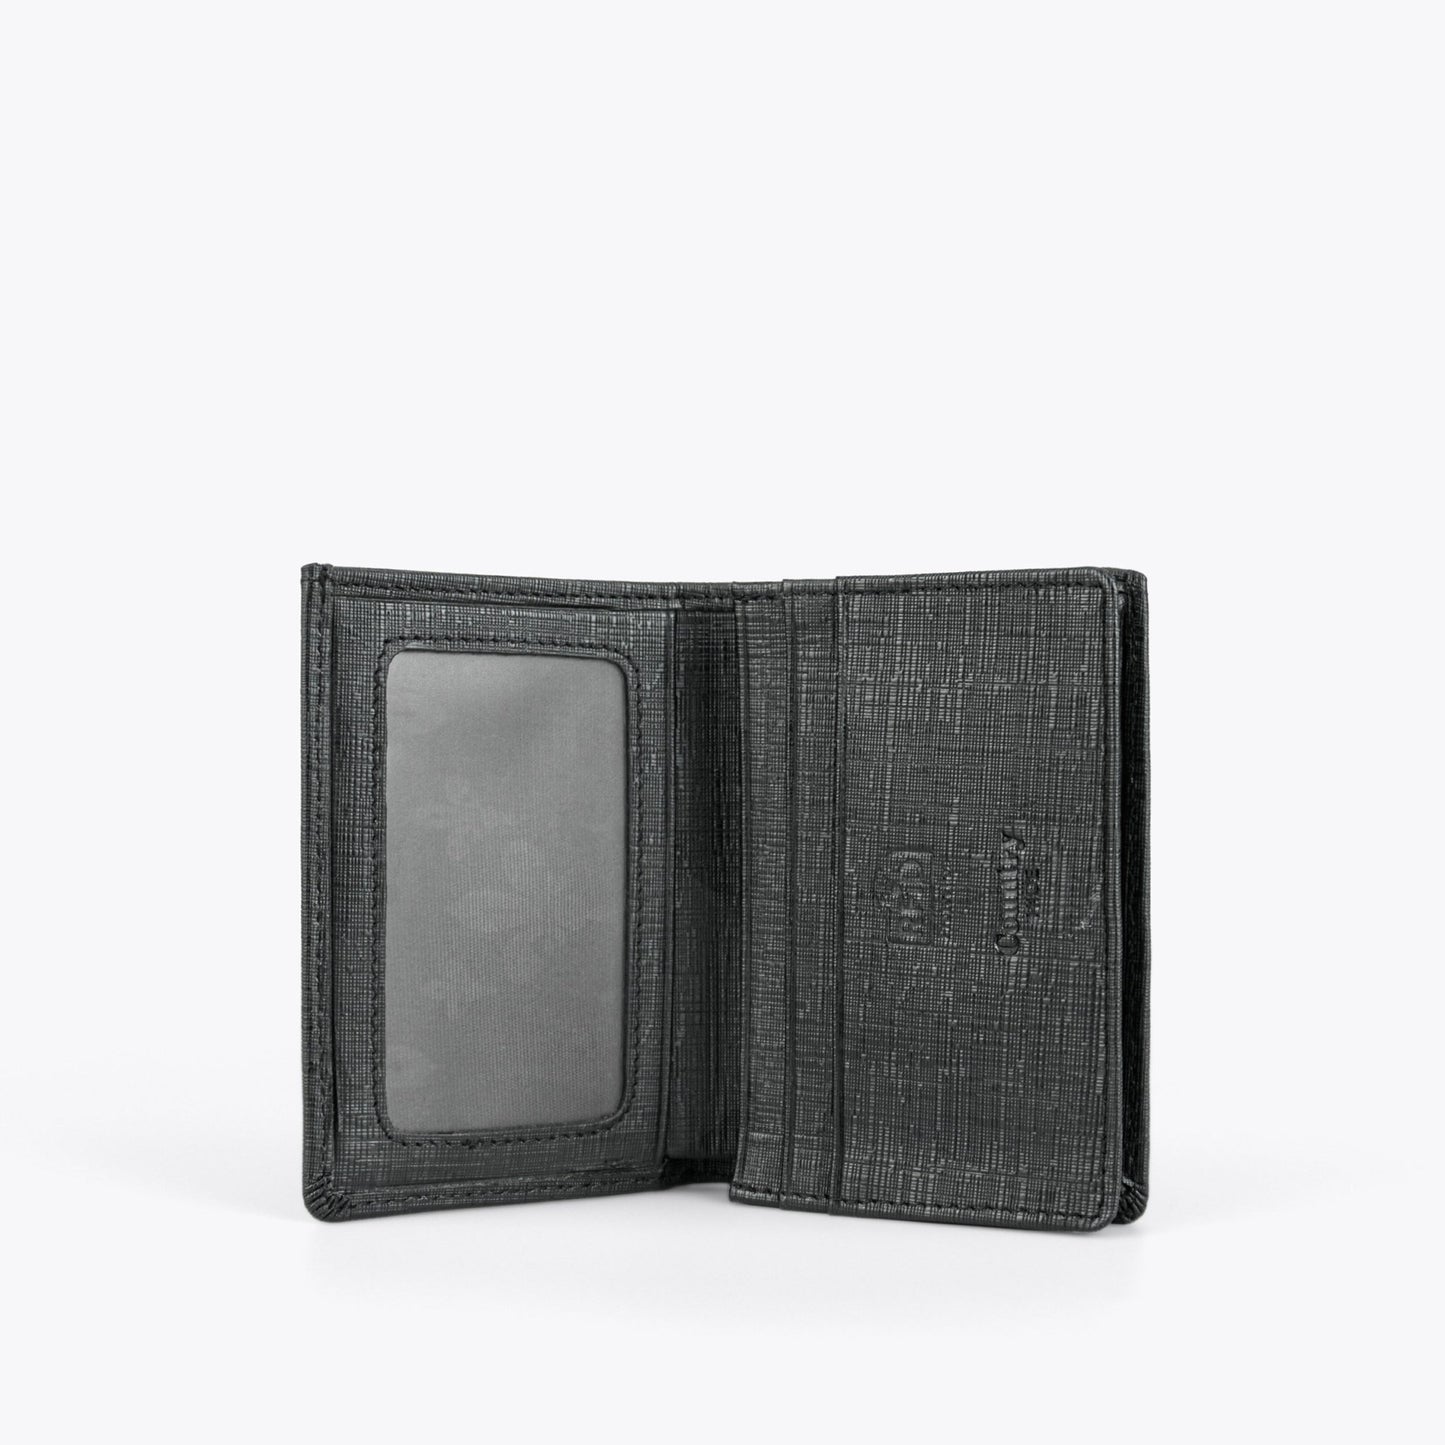 GAEUL Mini Wallet - Jet Black - www.countryhide.com